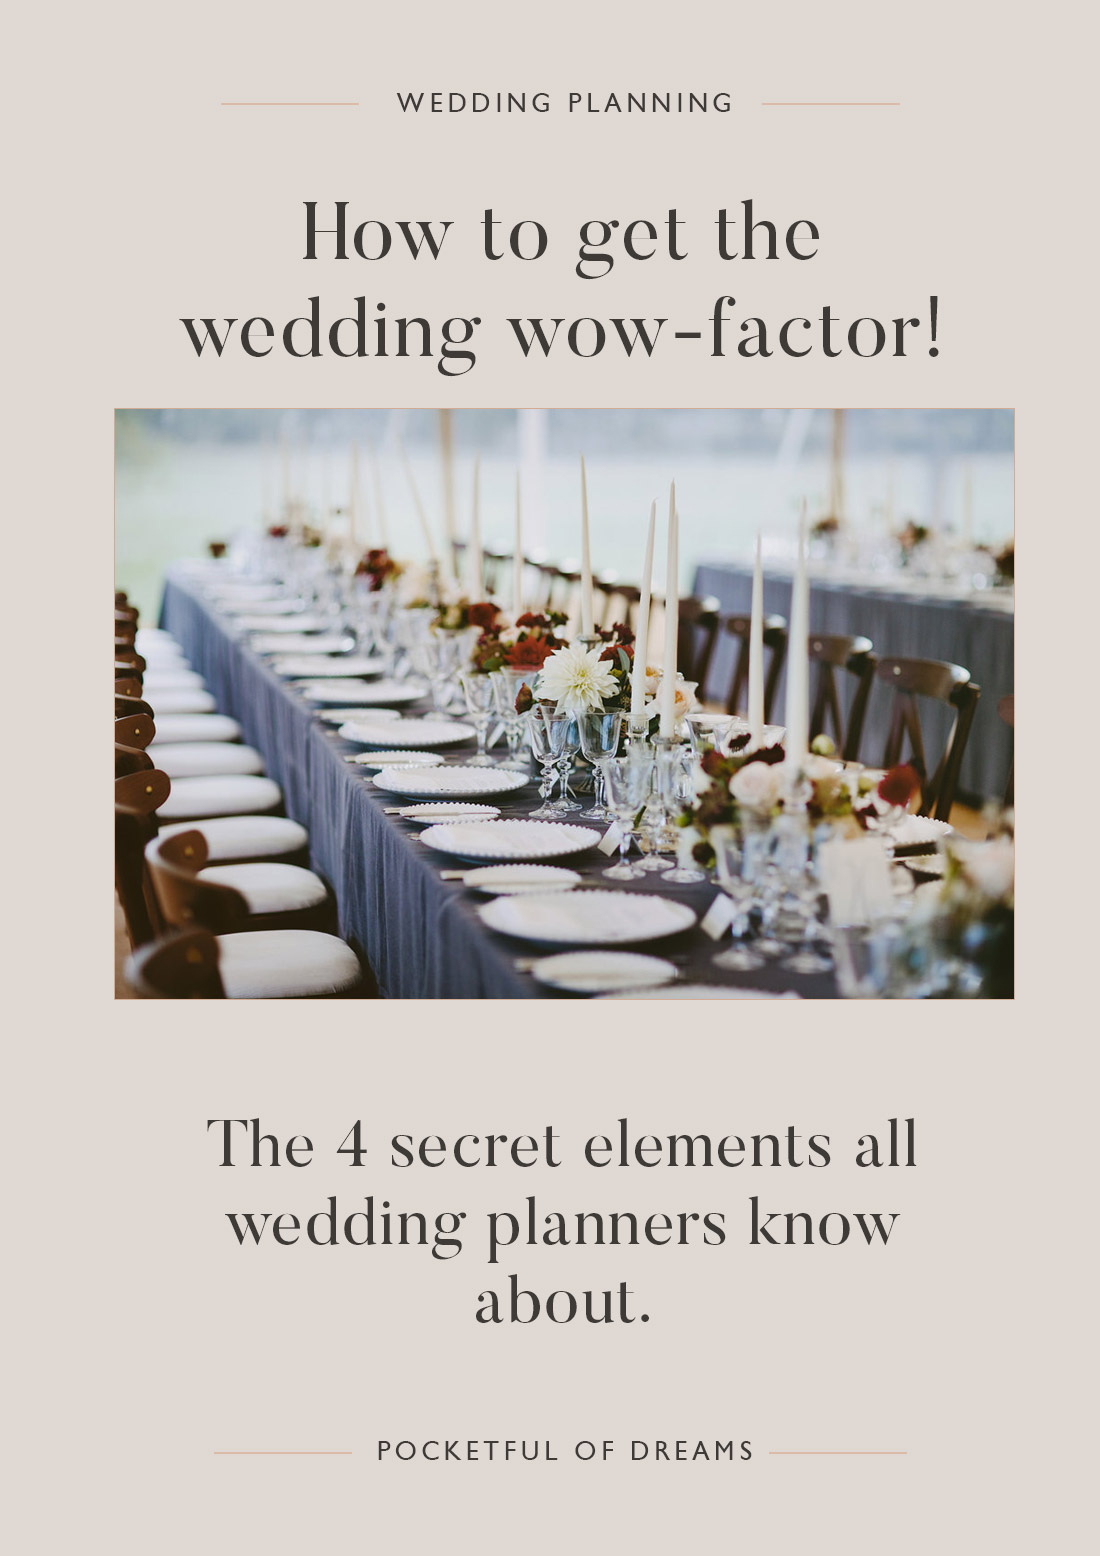 wedding wow factor, Expert Wedding Planning Advice, Pocketful of Dreams